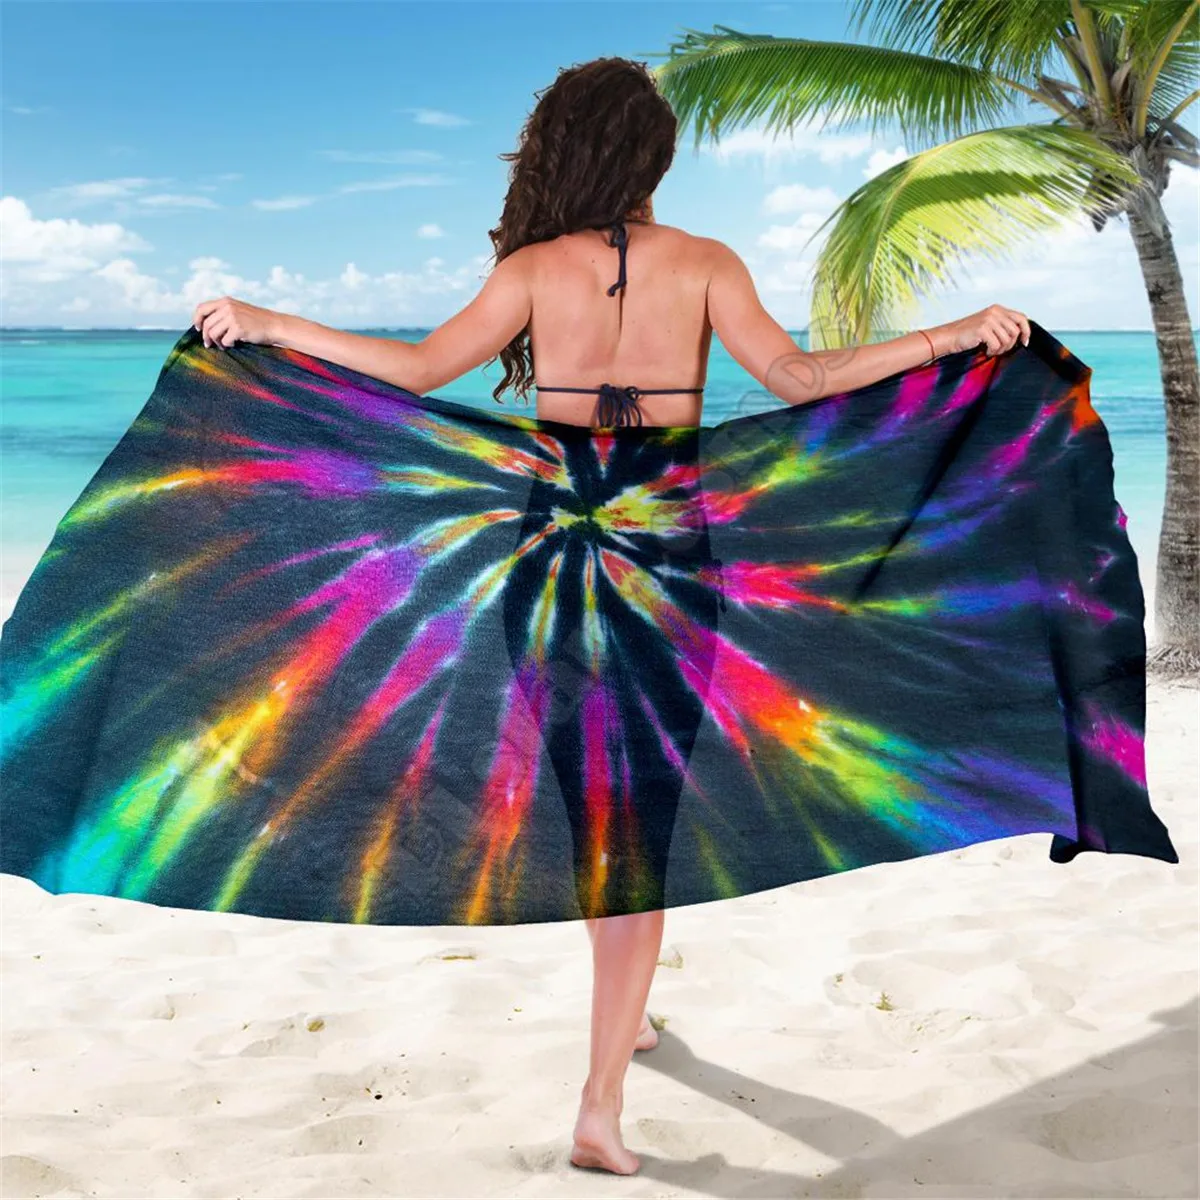 

Colorful Neon Tie Dye Sarong 3D printed Towel Summer Seaside resort Casual Bohemian style Beach Towel